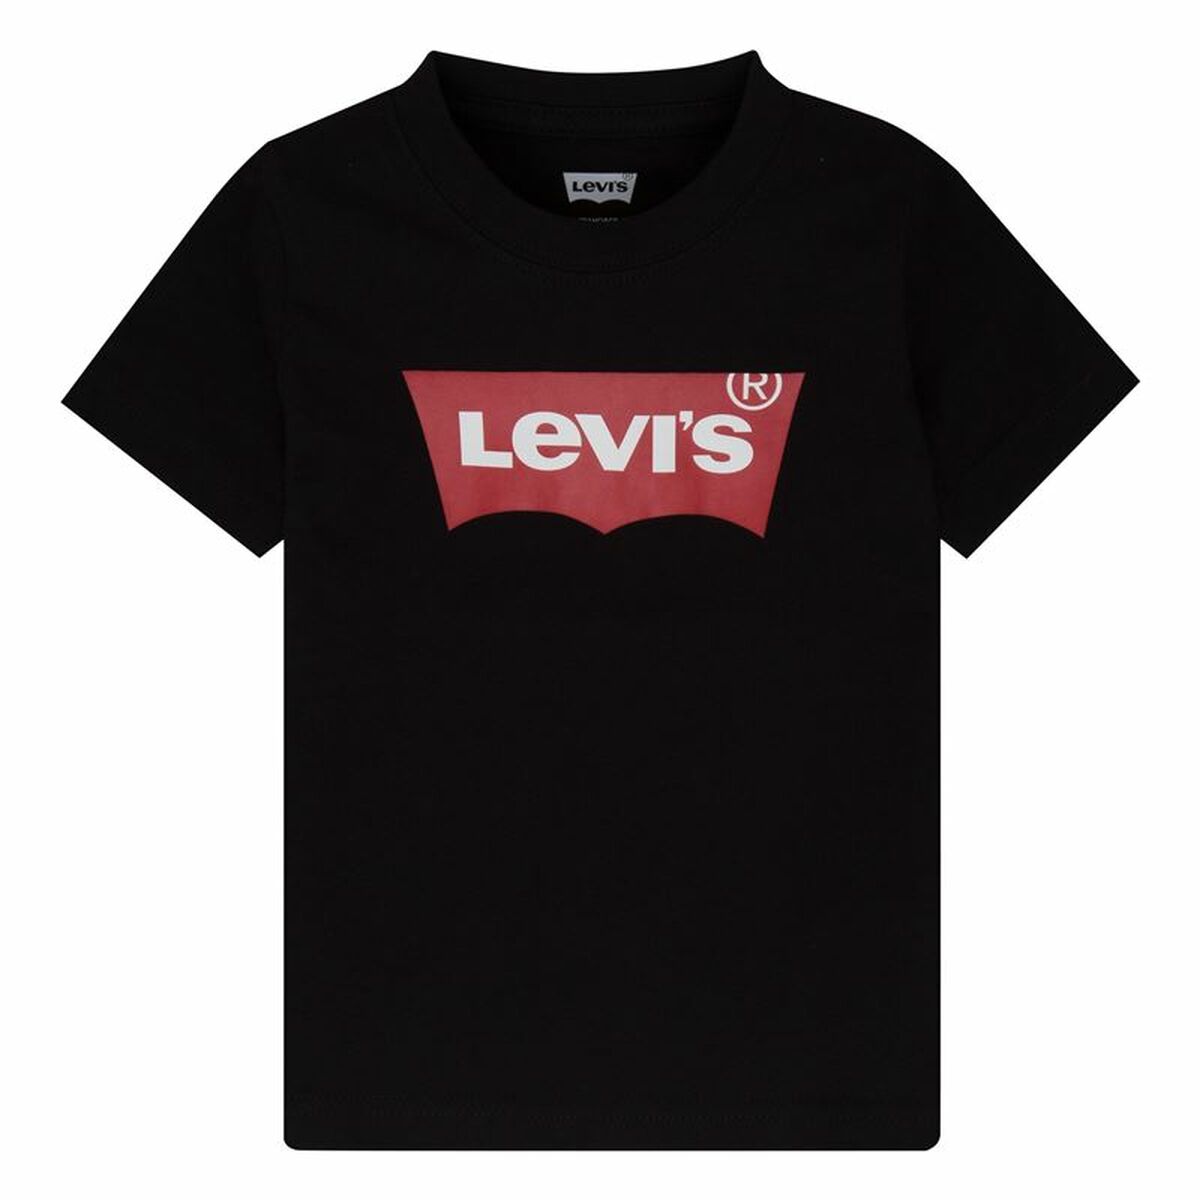 Child's Short Sleeve T-Shirt Levi's Batwing Boy Dark Black